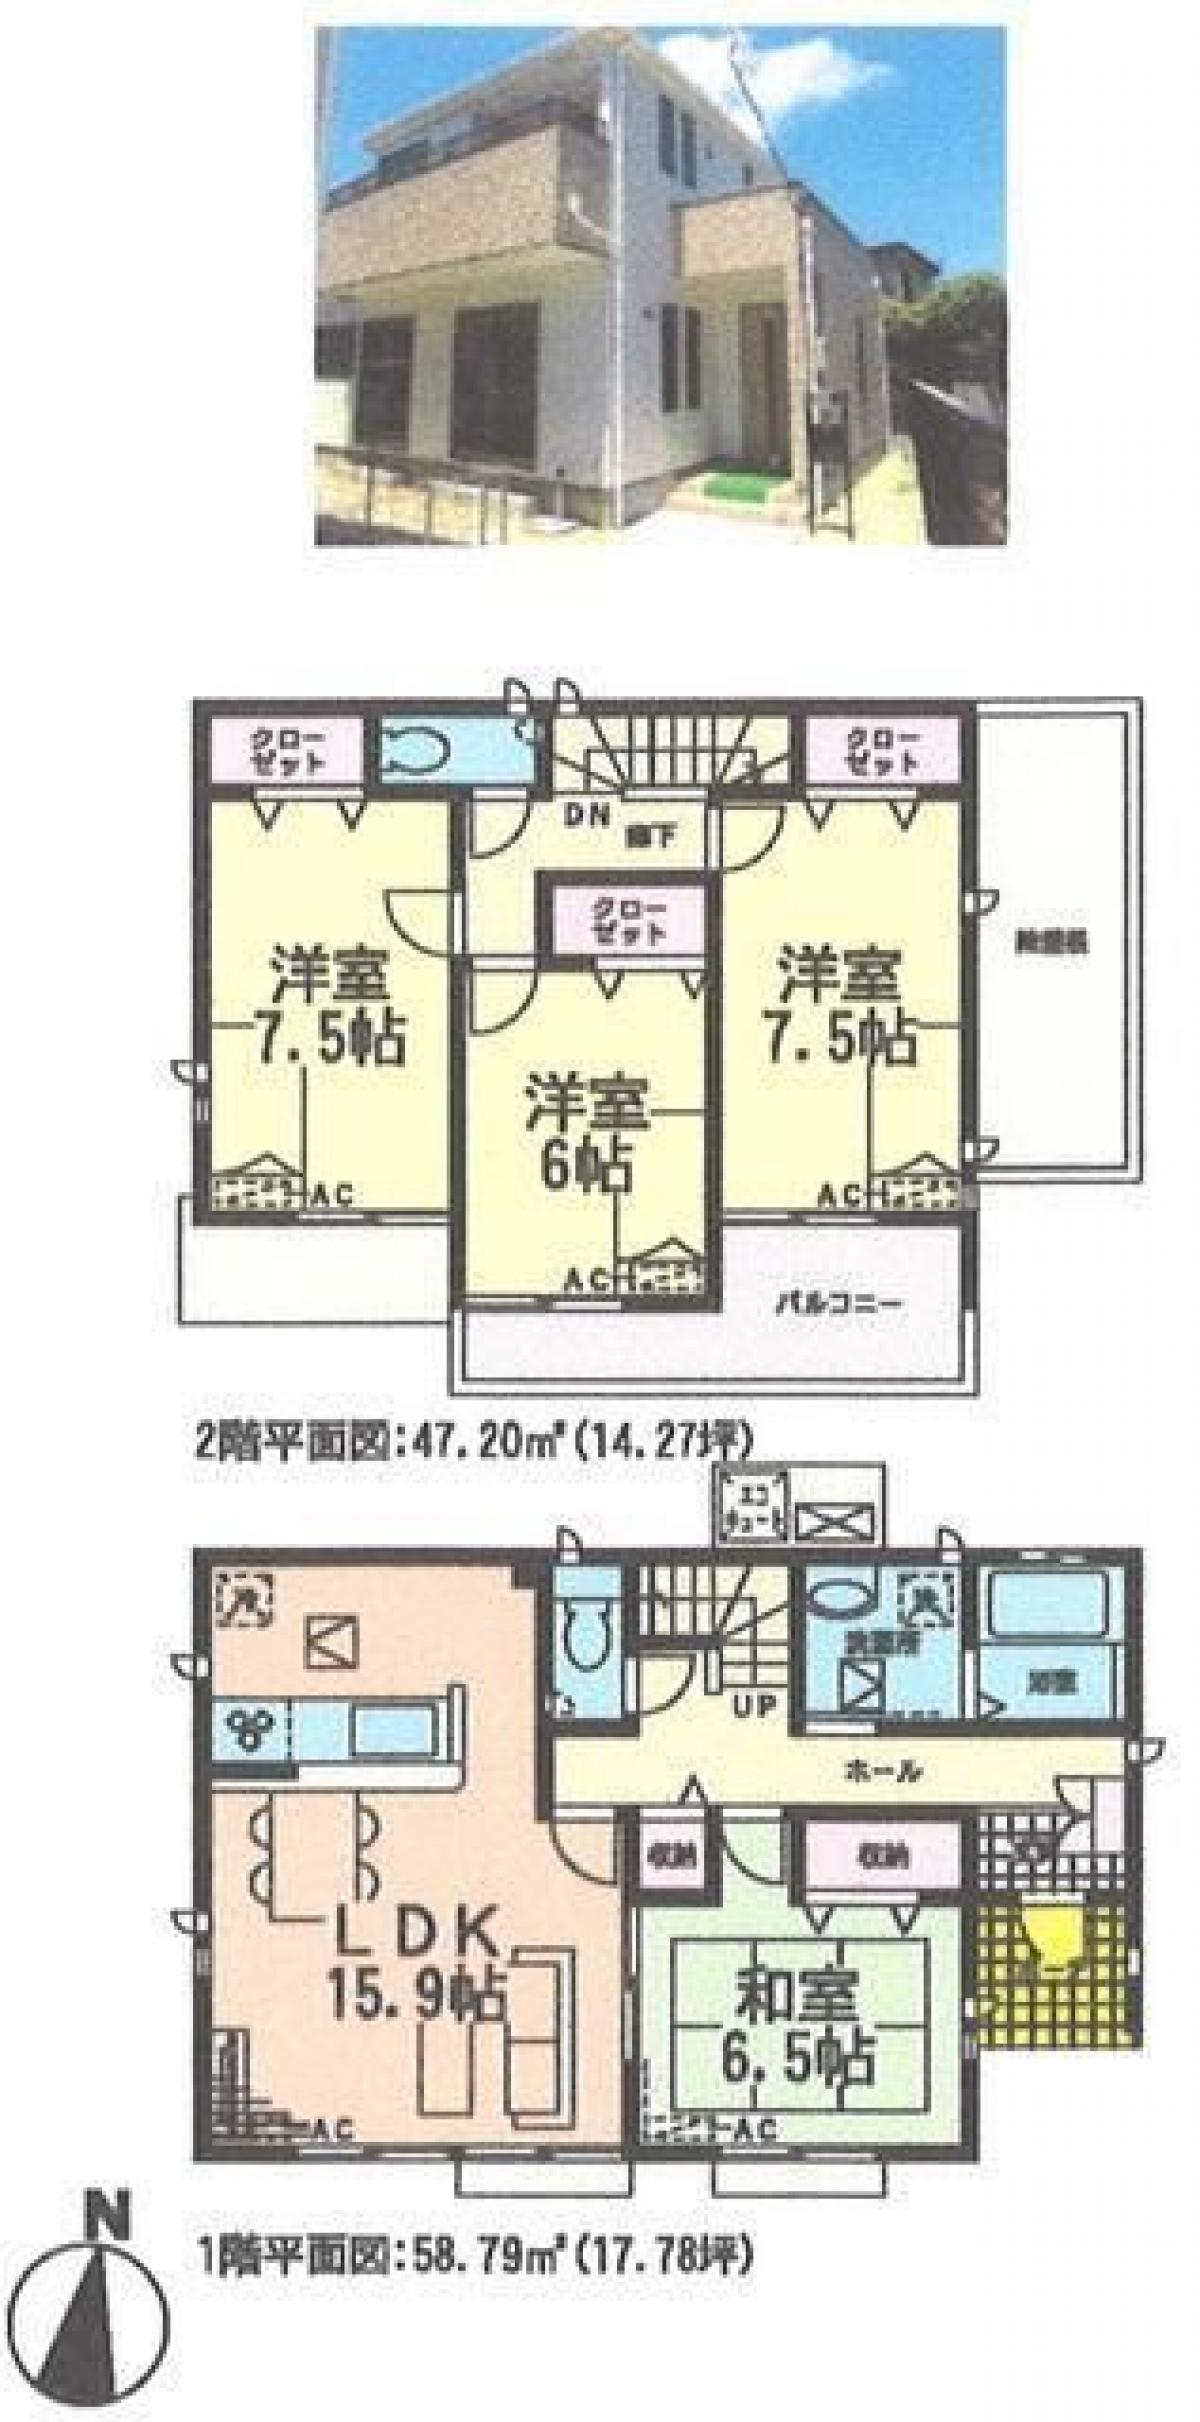 Picture of Home For Sale in Tagajo Shi, Miyagi, Japan